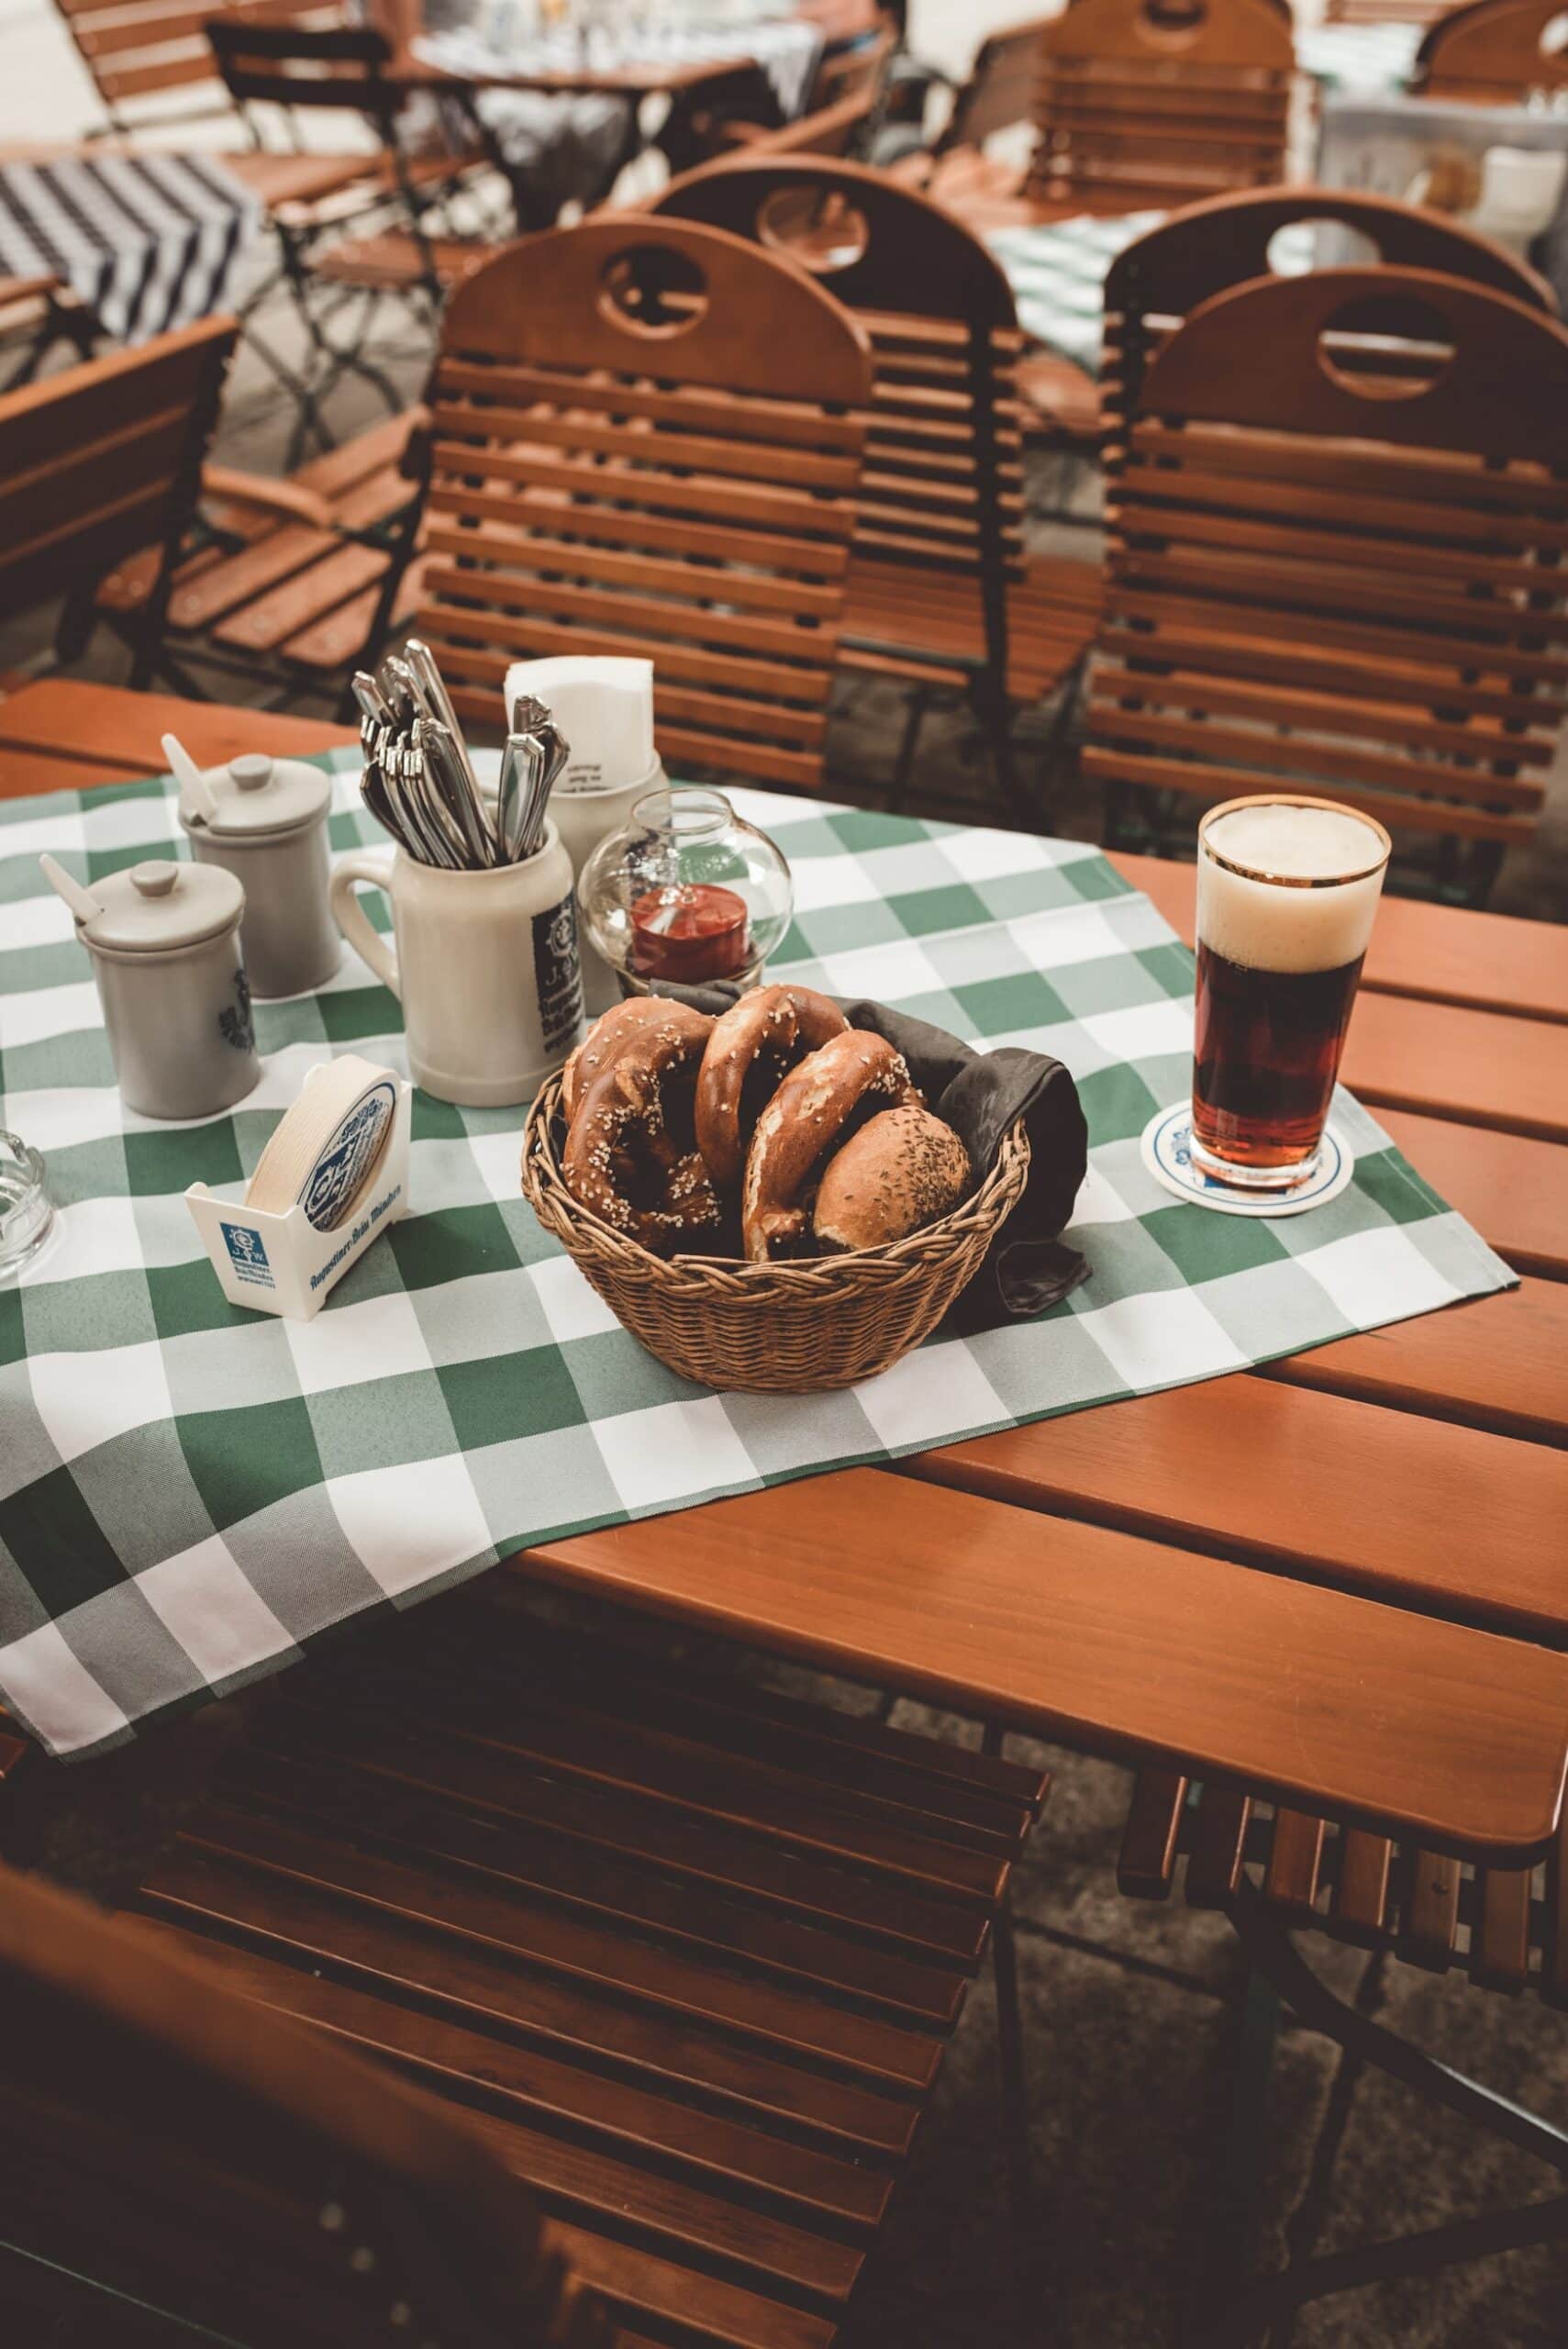 Putting your feet up in a Munich beer garden